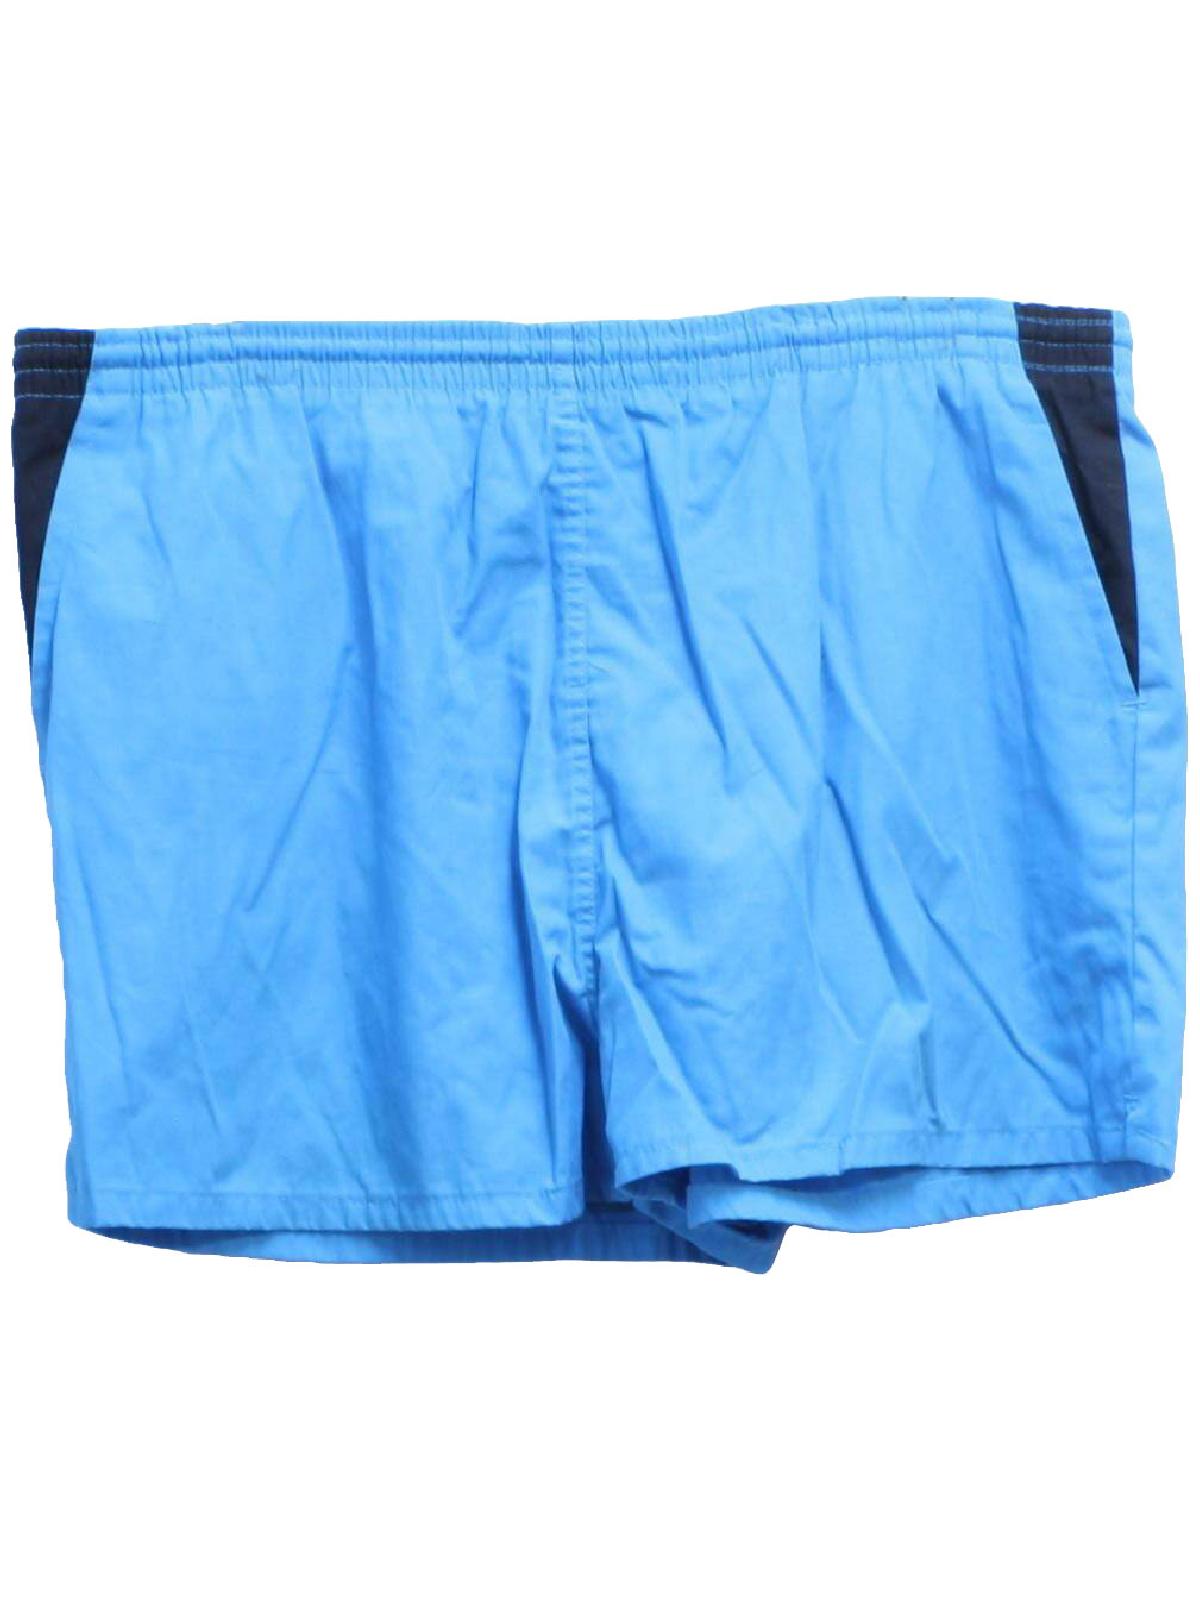 1980's Retro Swimsuit/Swimwear: 80s -Haband- Mens blue background ...